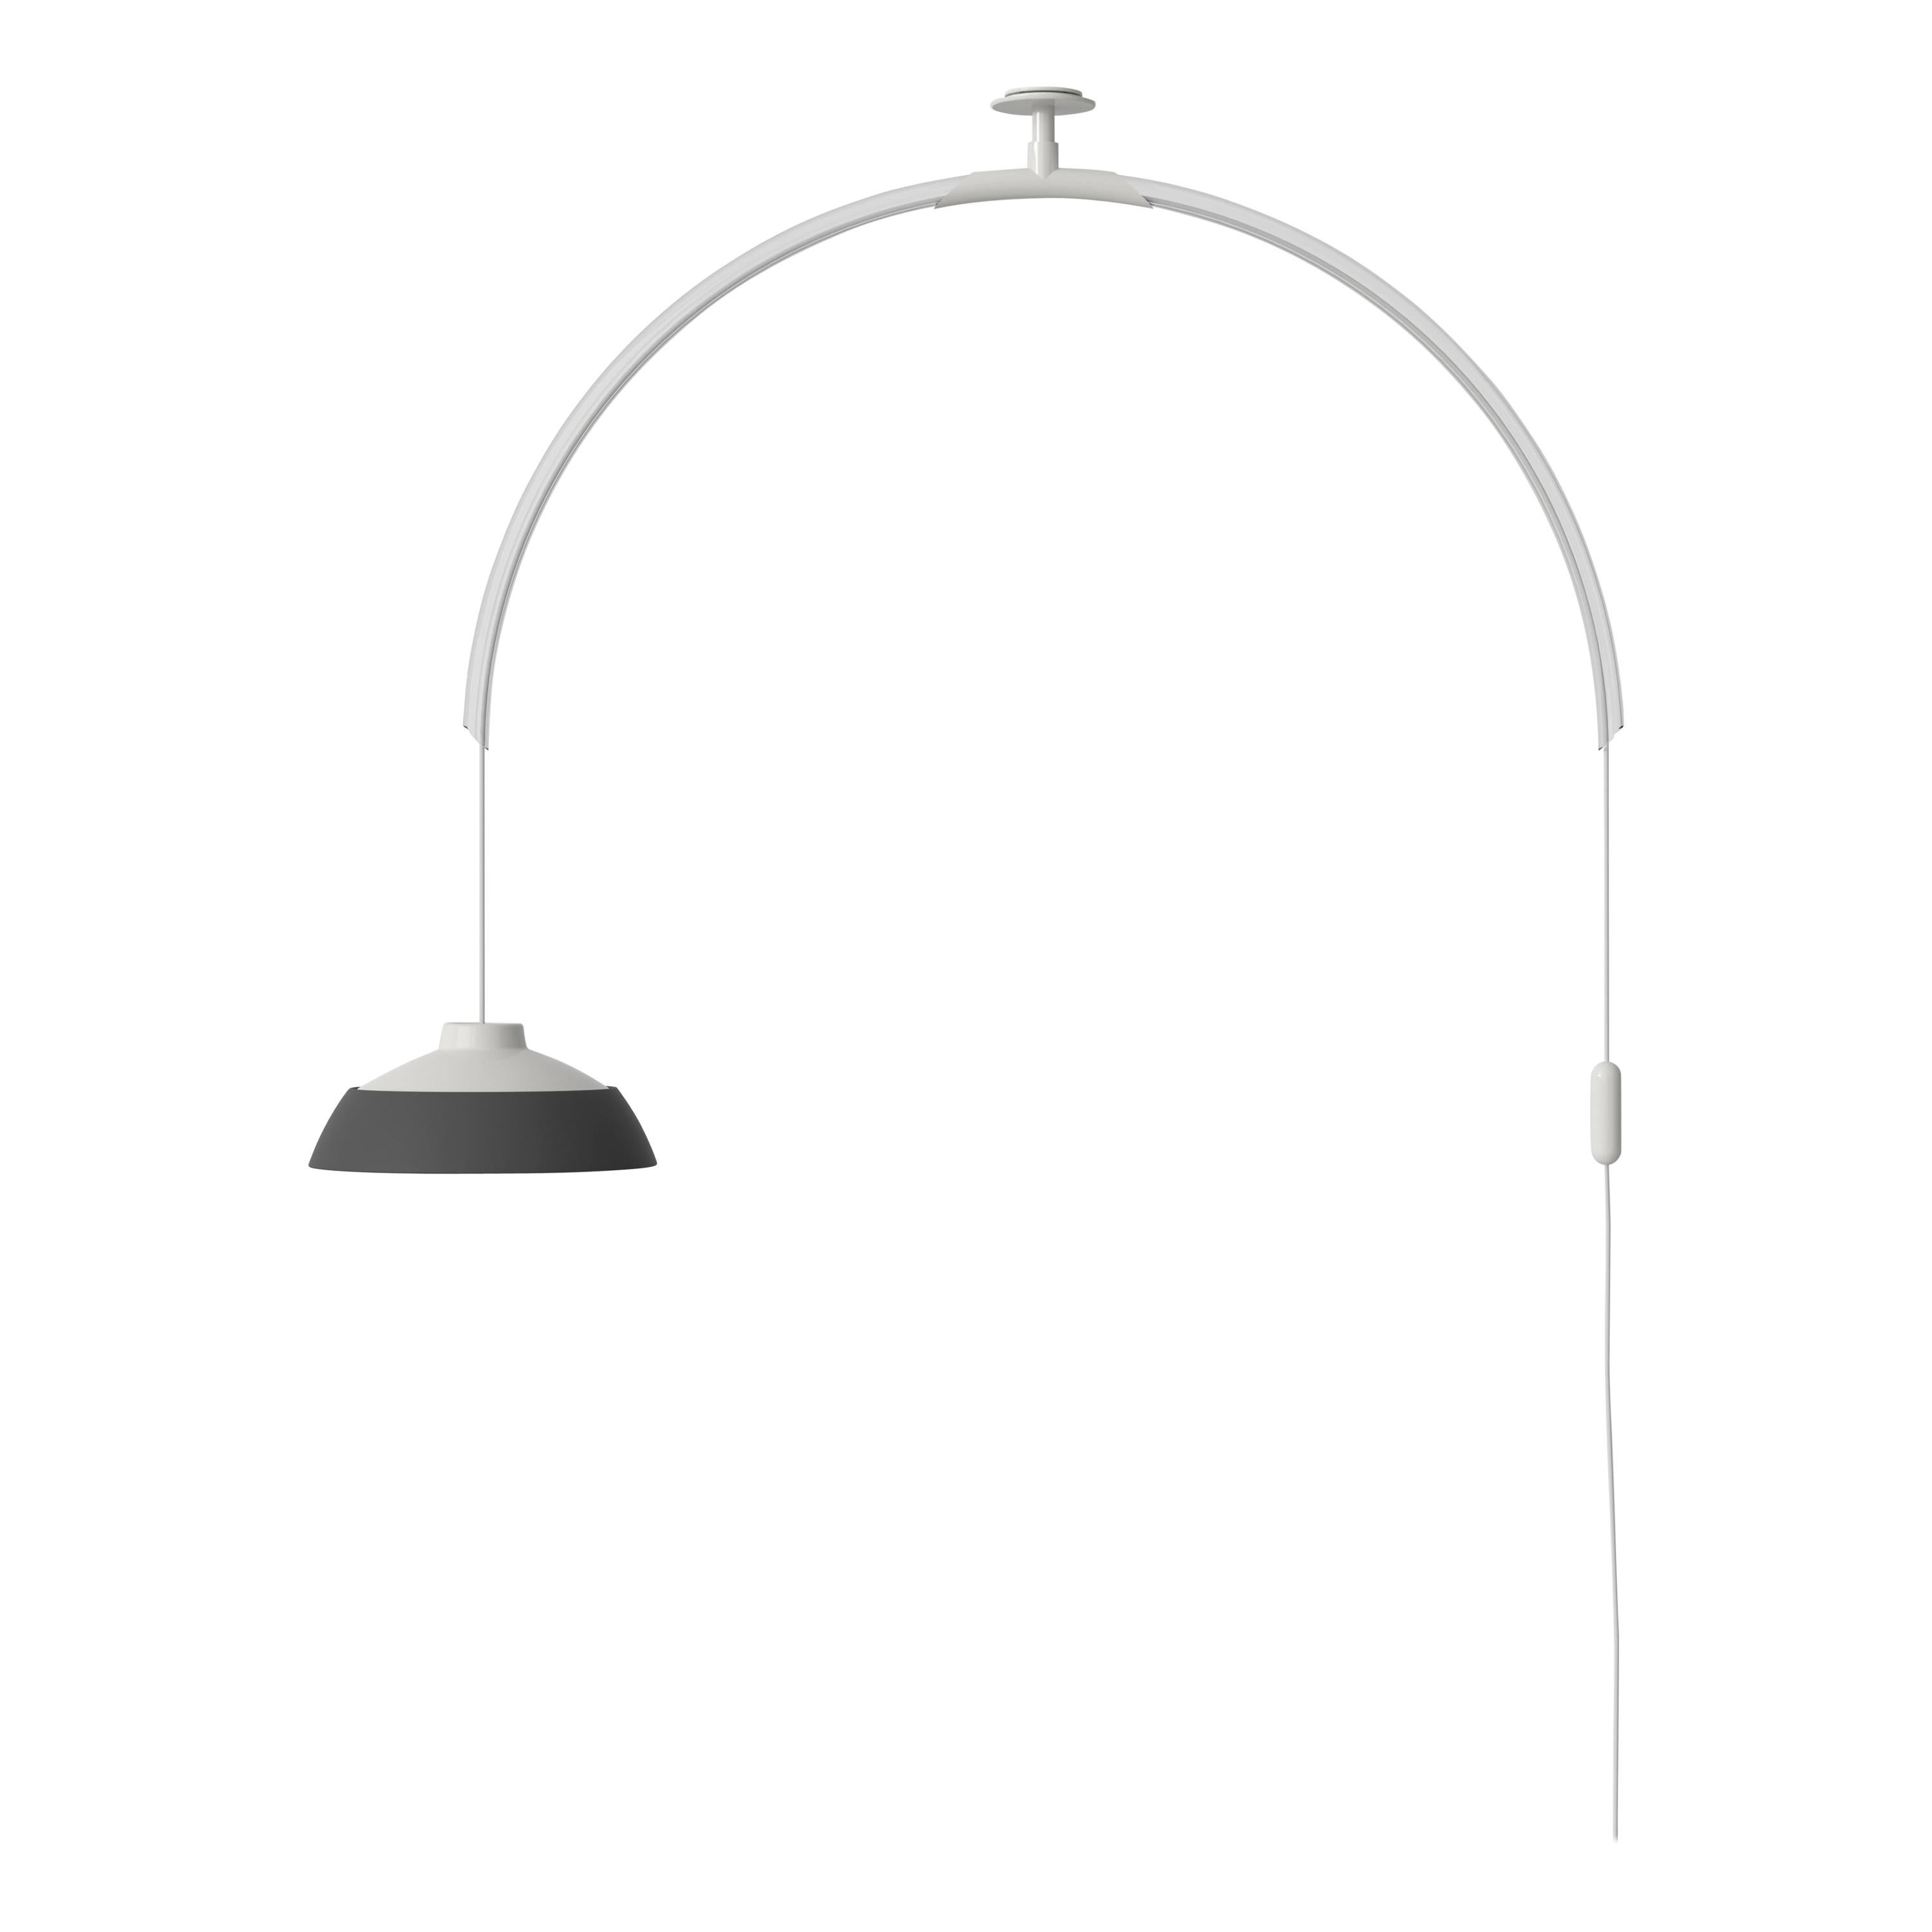 Gino Sarfatti Lamp Model 2129